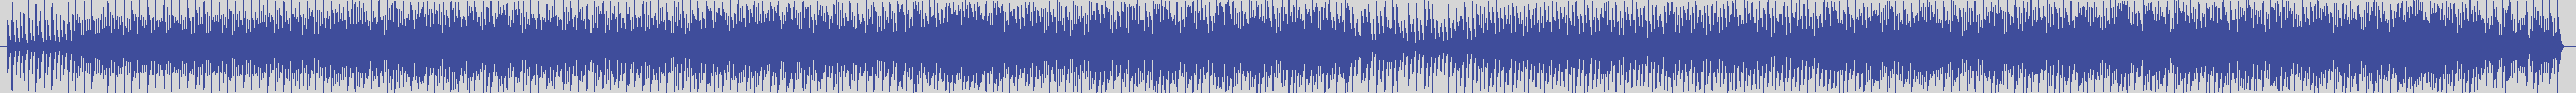 upr [UPR010] Absolute Body Control - Heatbeat [Original Mix] audio wave form